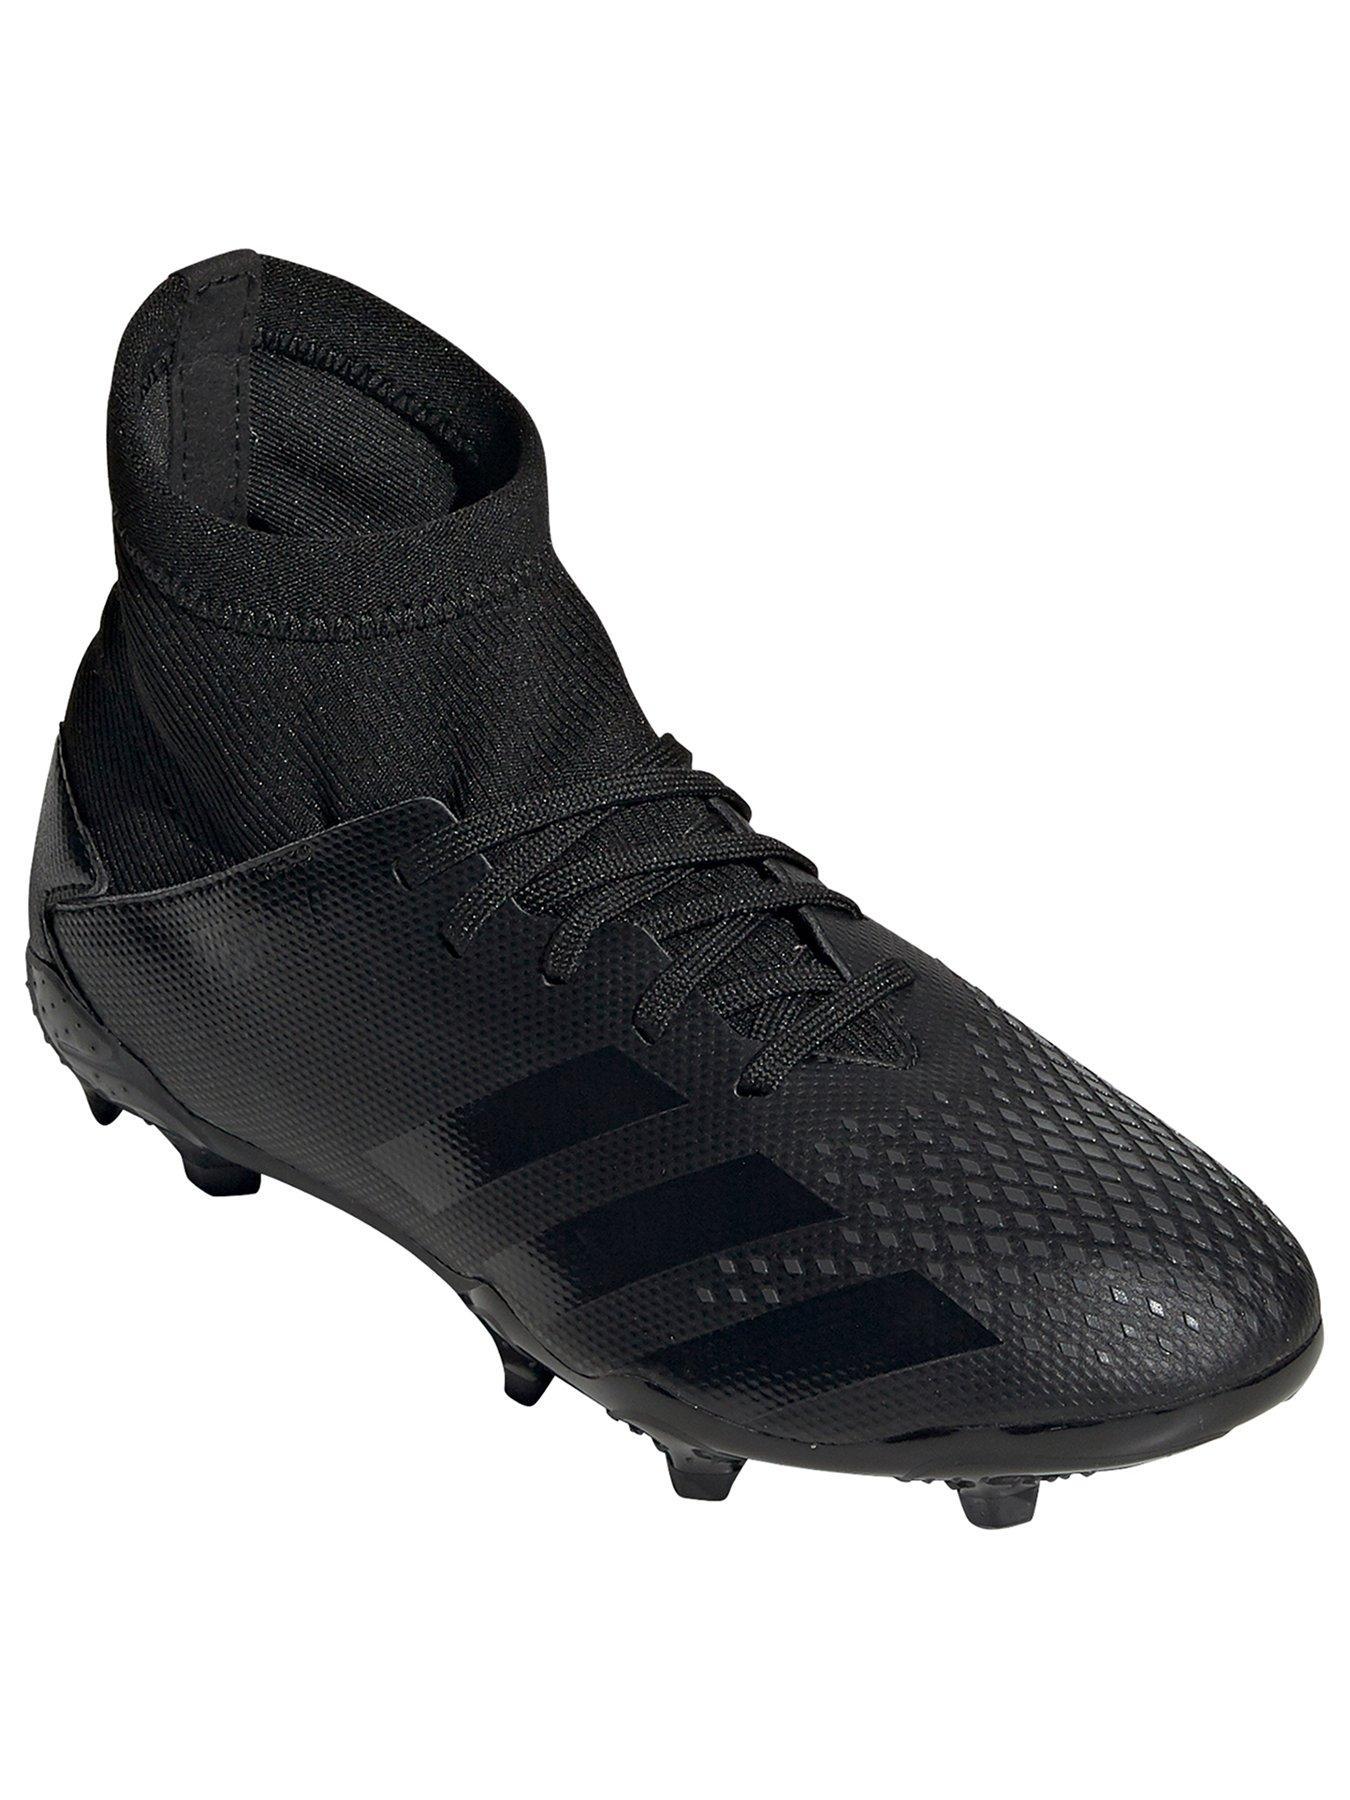 adidas football boots kids